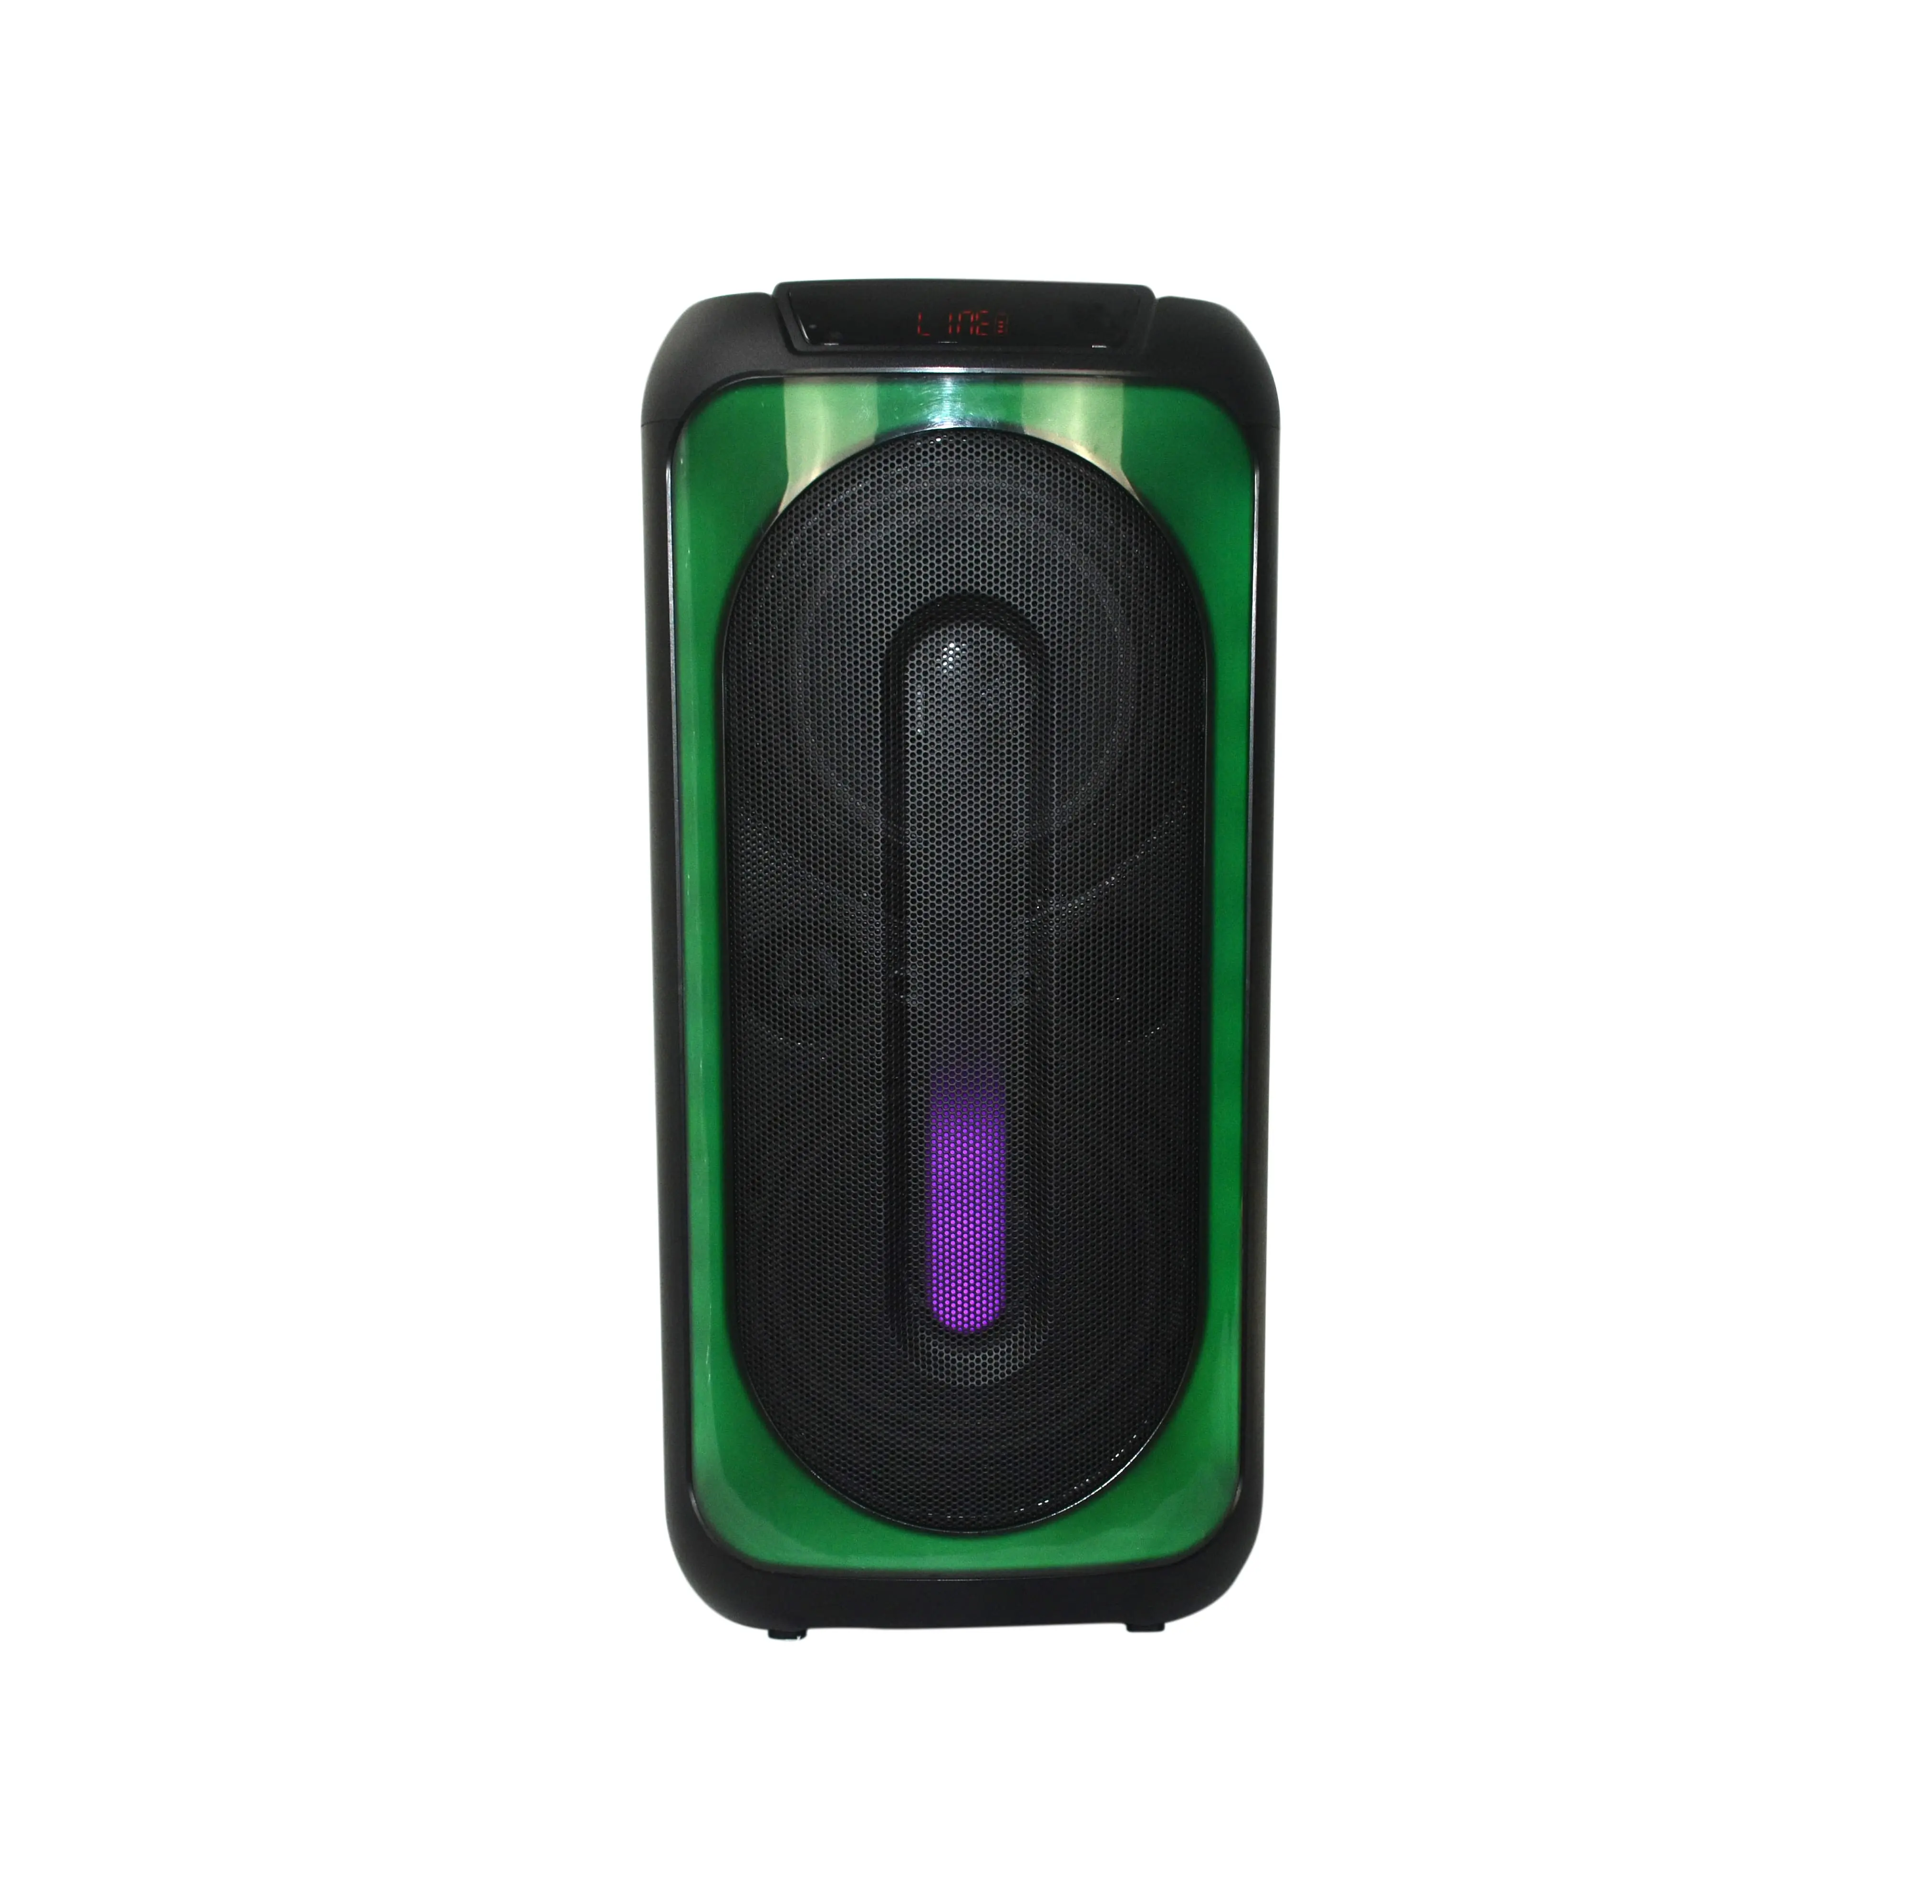 T açık LED ışık Bluetooth arabası hoparlör çift 8 inç multimedya Pa hoparlör parti taşınabilir hoparlör